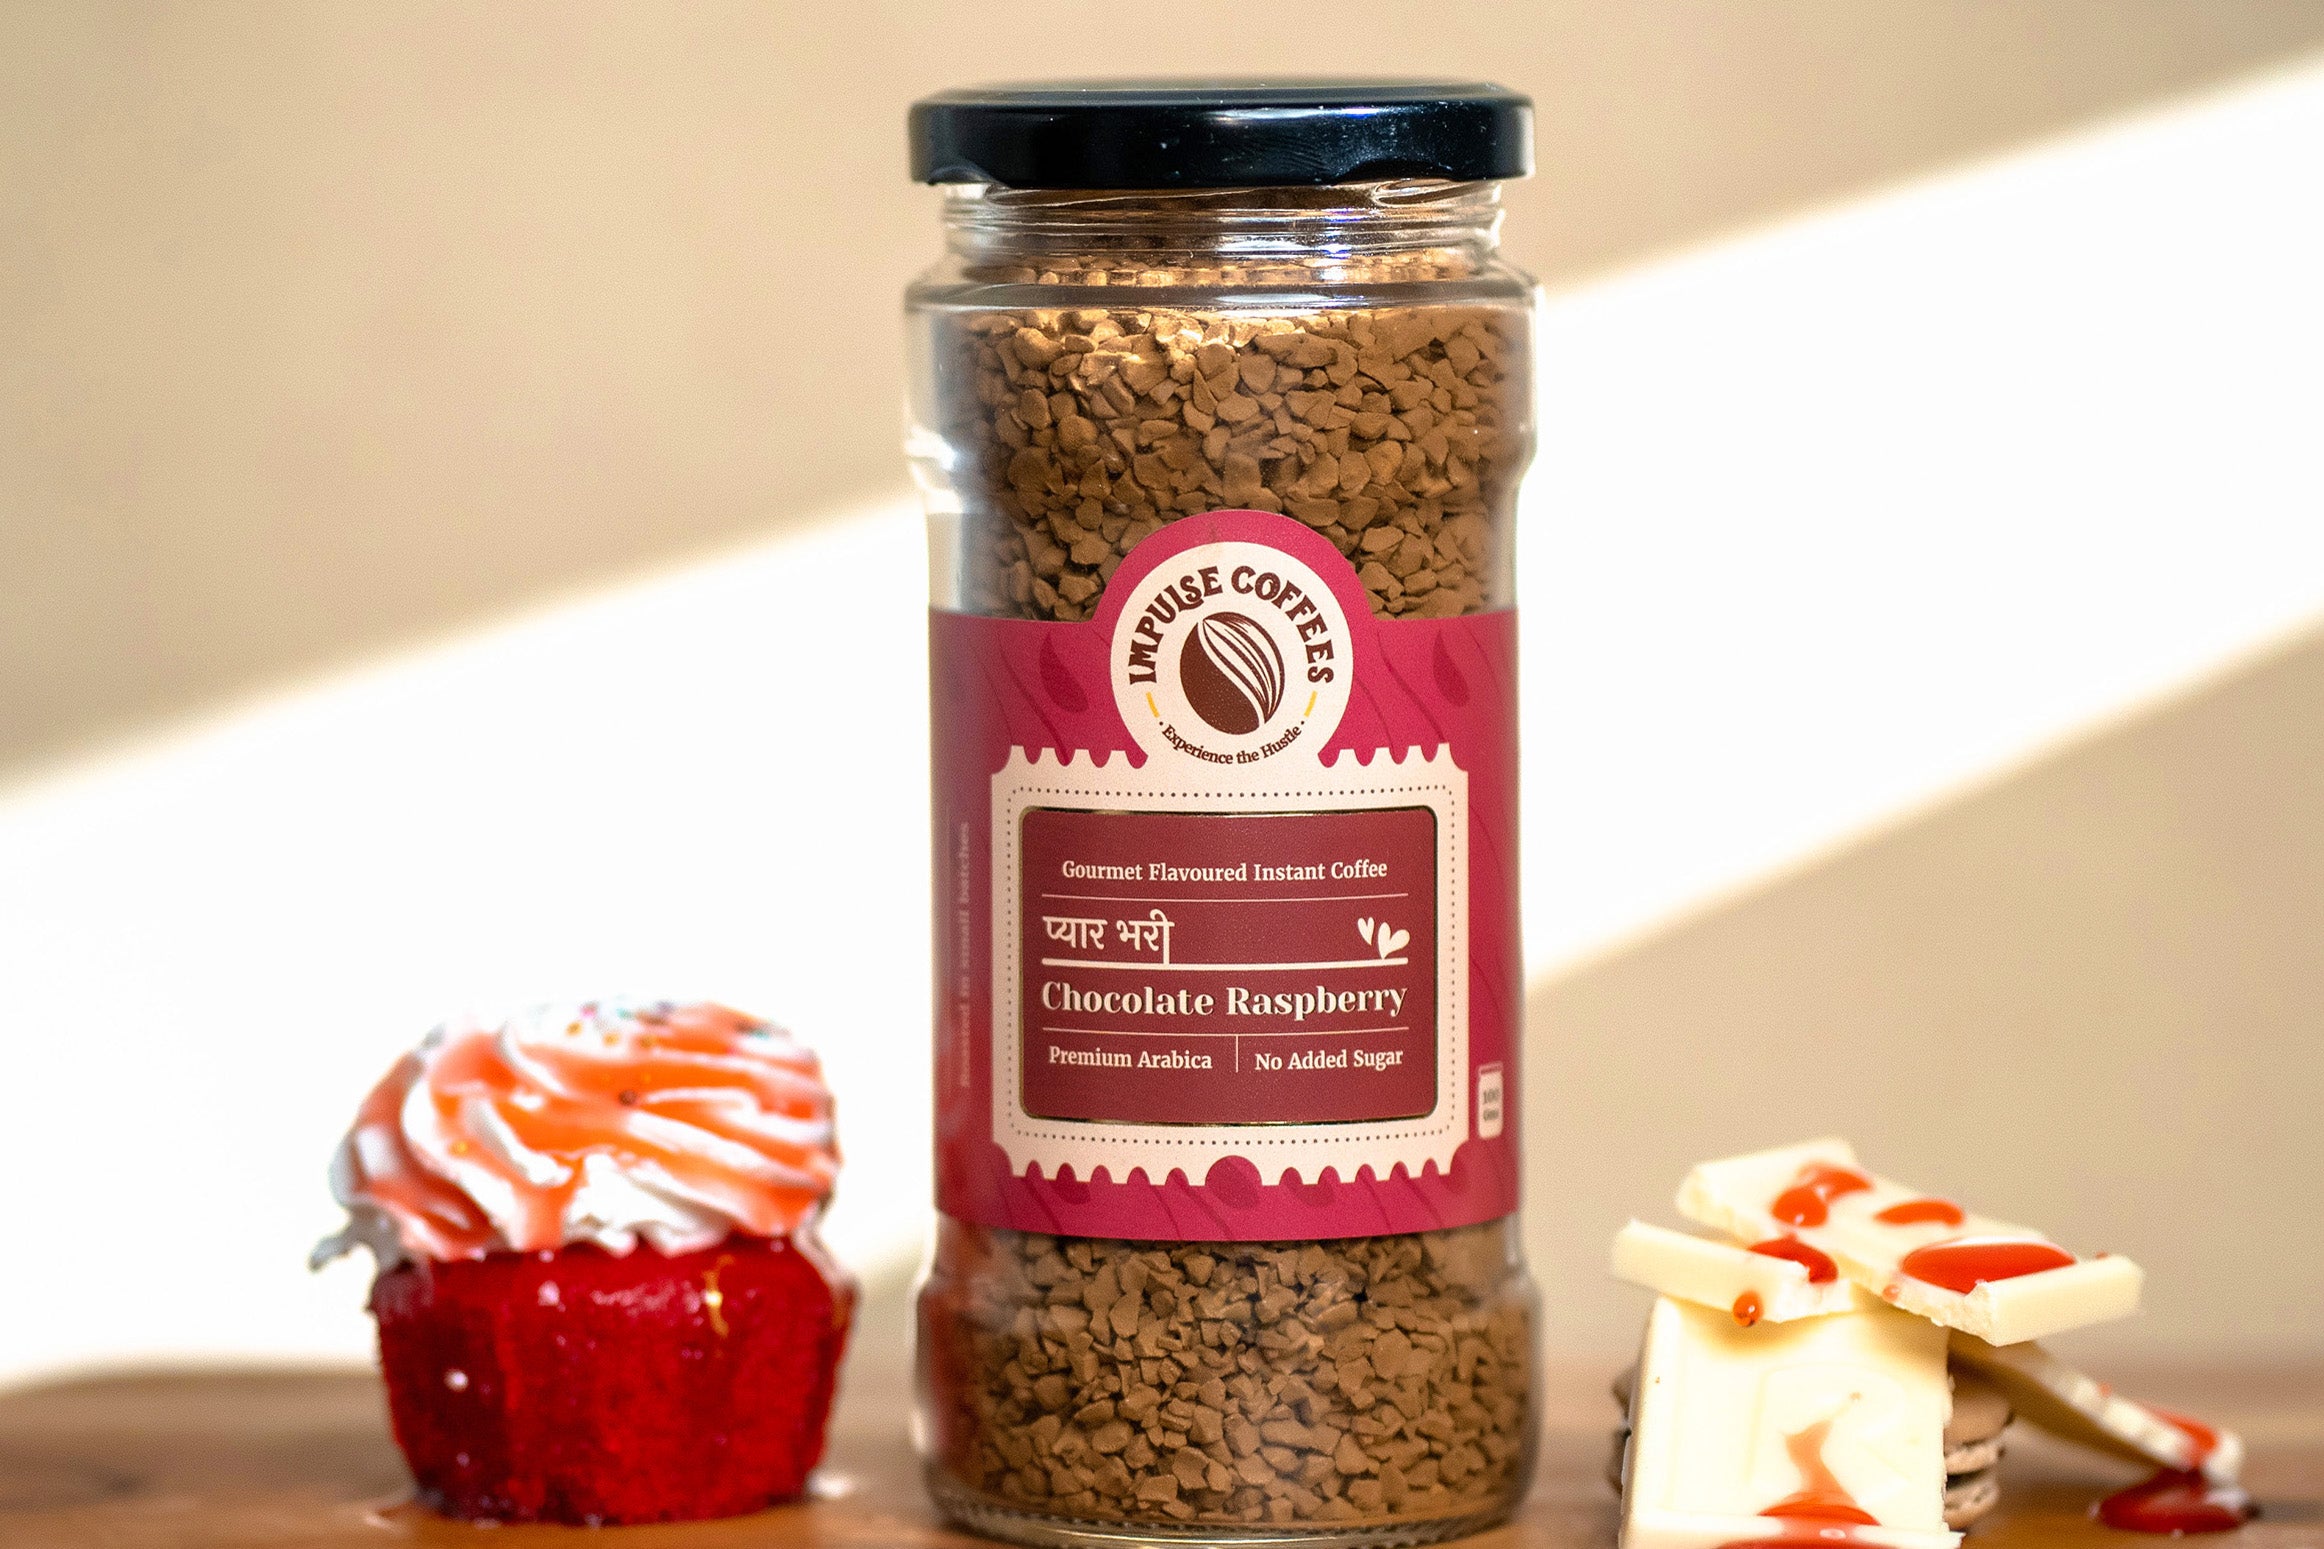 Pyaarbhari Chocolate Raspberry Premium Instant Coffee 100gms